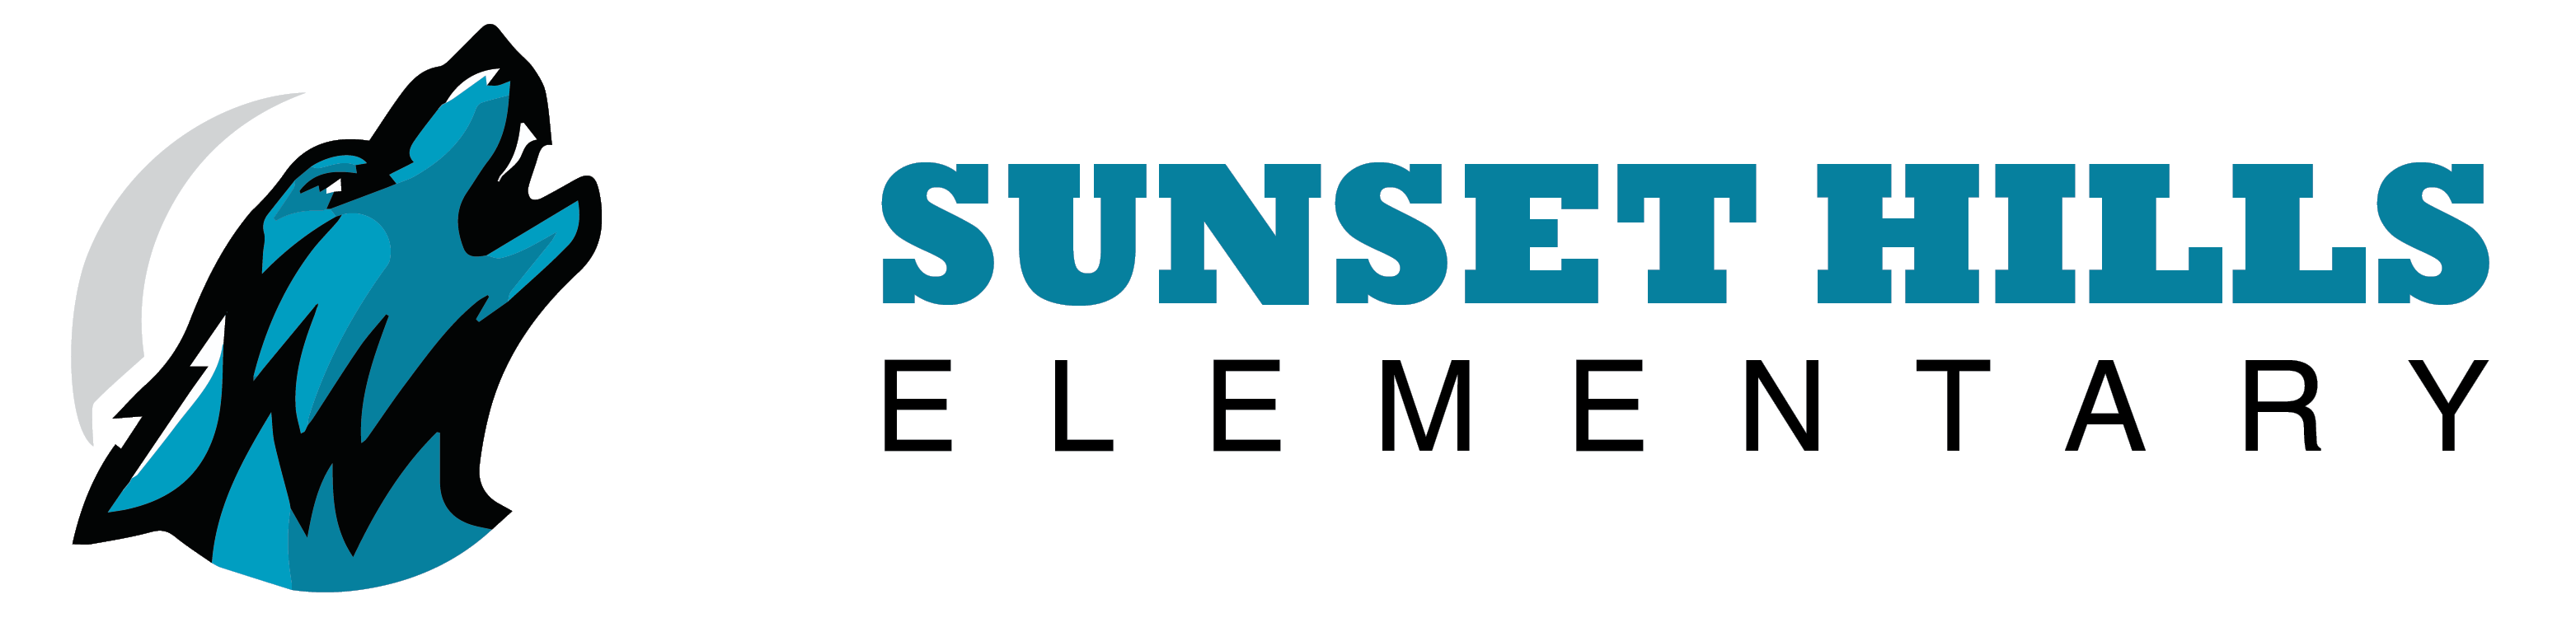 sunset view school logo